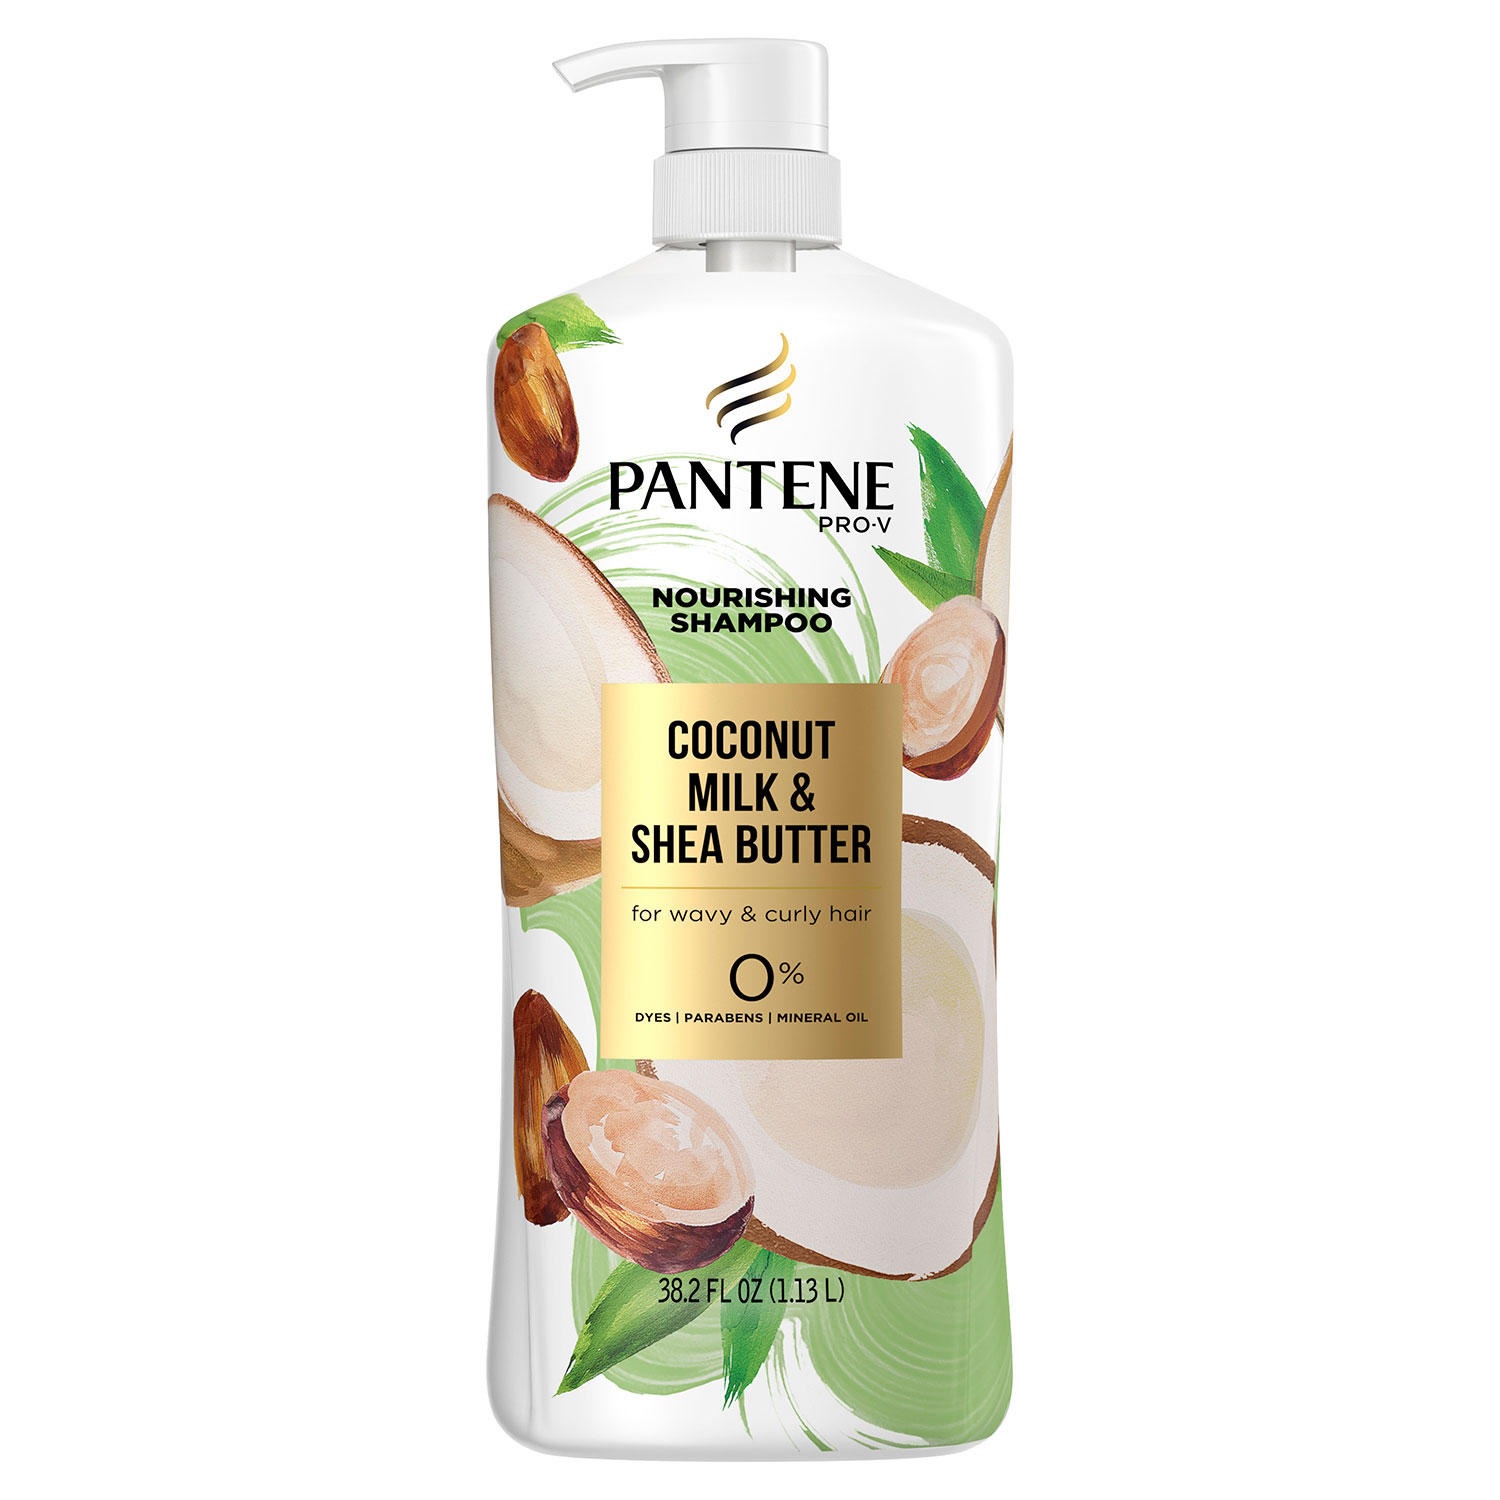 Pantene Pro-V Nourishing Shampoo, Coconut Milk & Shea Butter (38.2 Fluid Ounce)